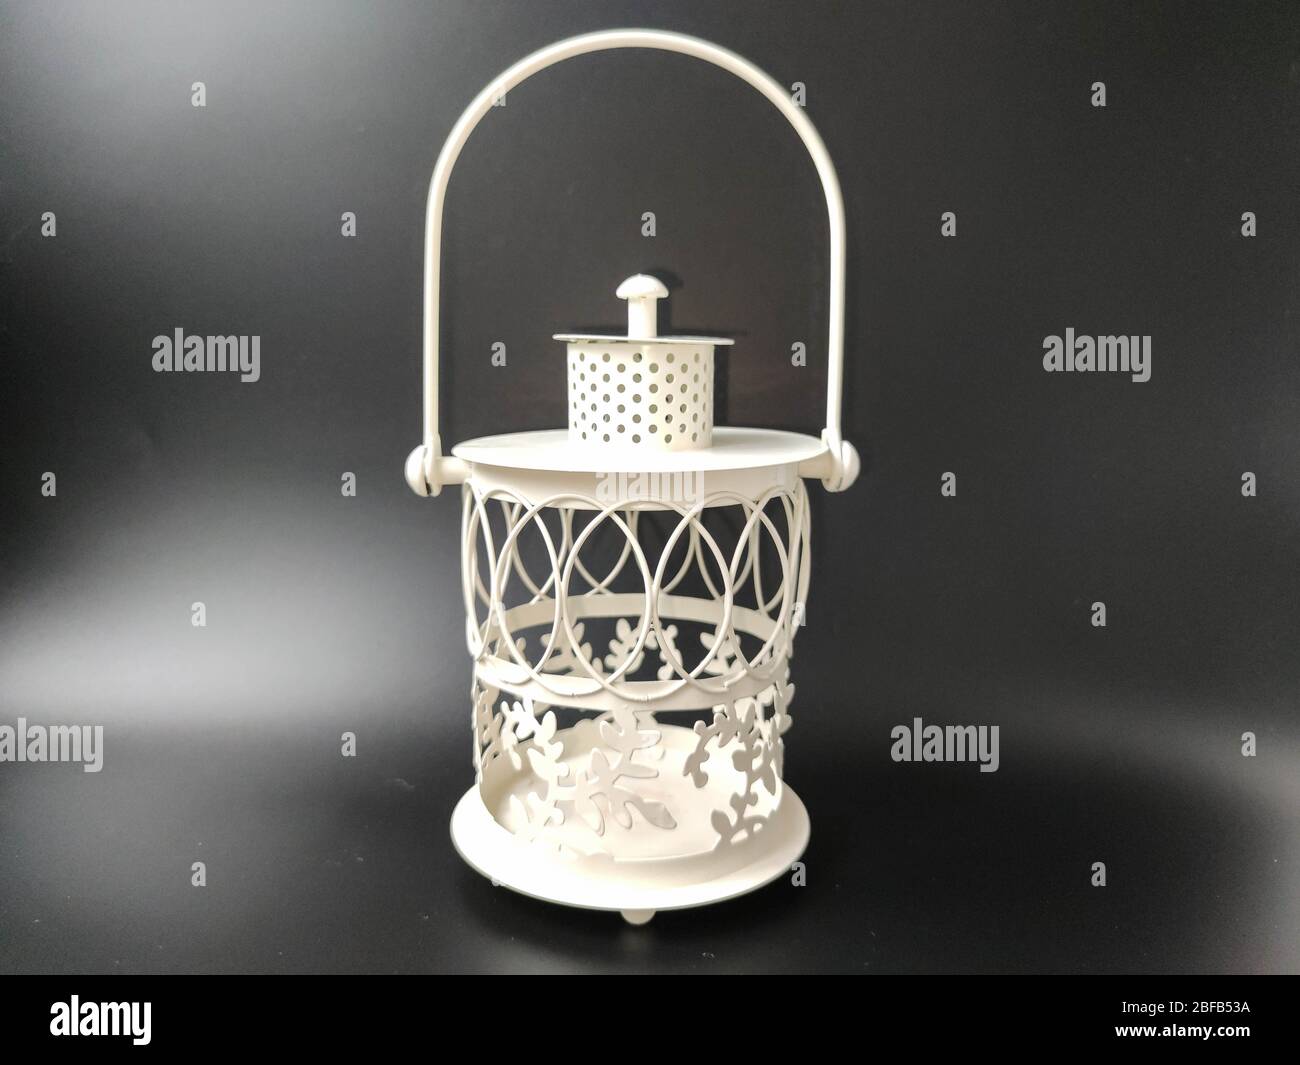 White vintage lantern with an orange candle on black. Concept - Ramadan kareem holiday celebration. Royalty Free Stock image Stock Photo